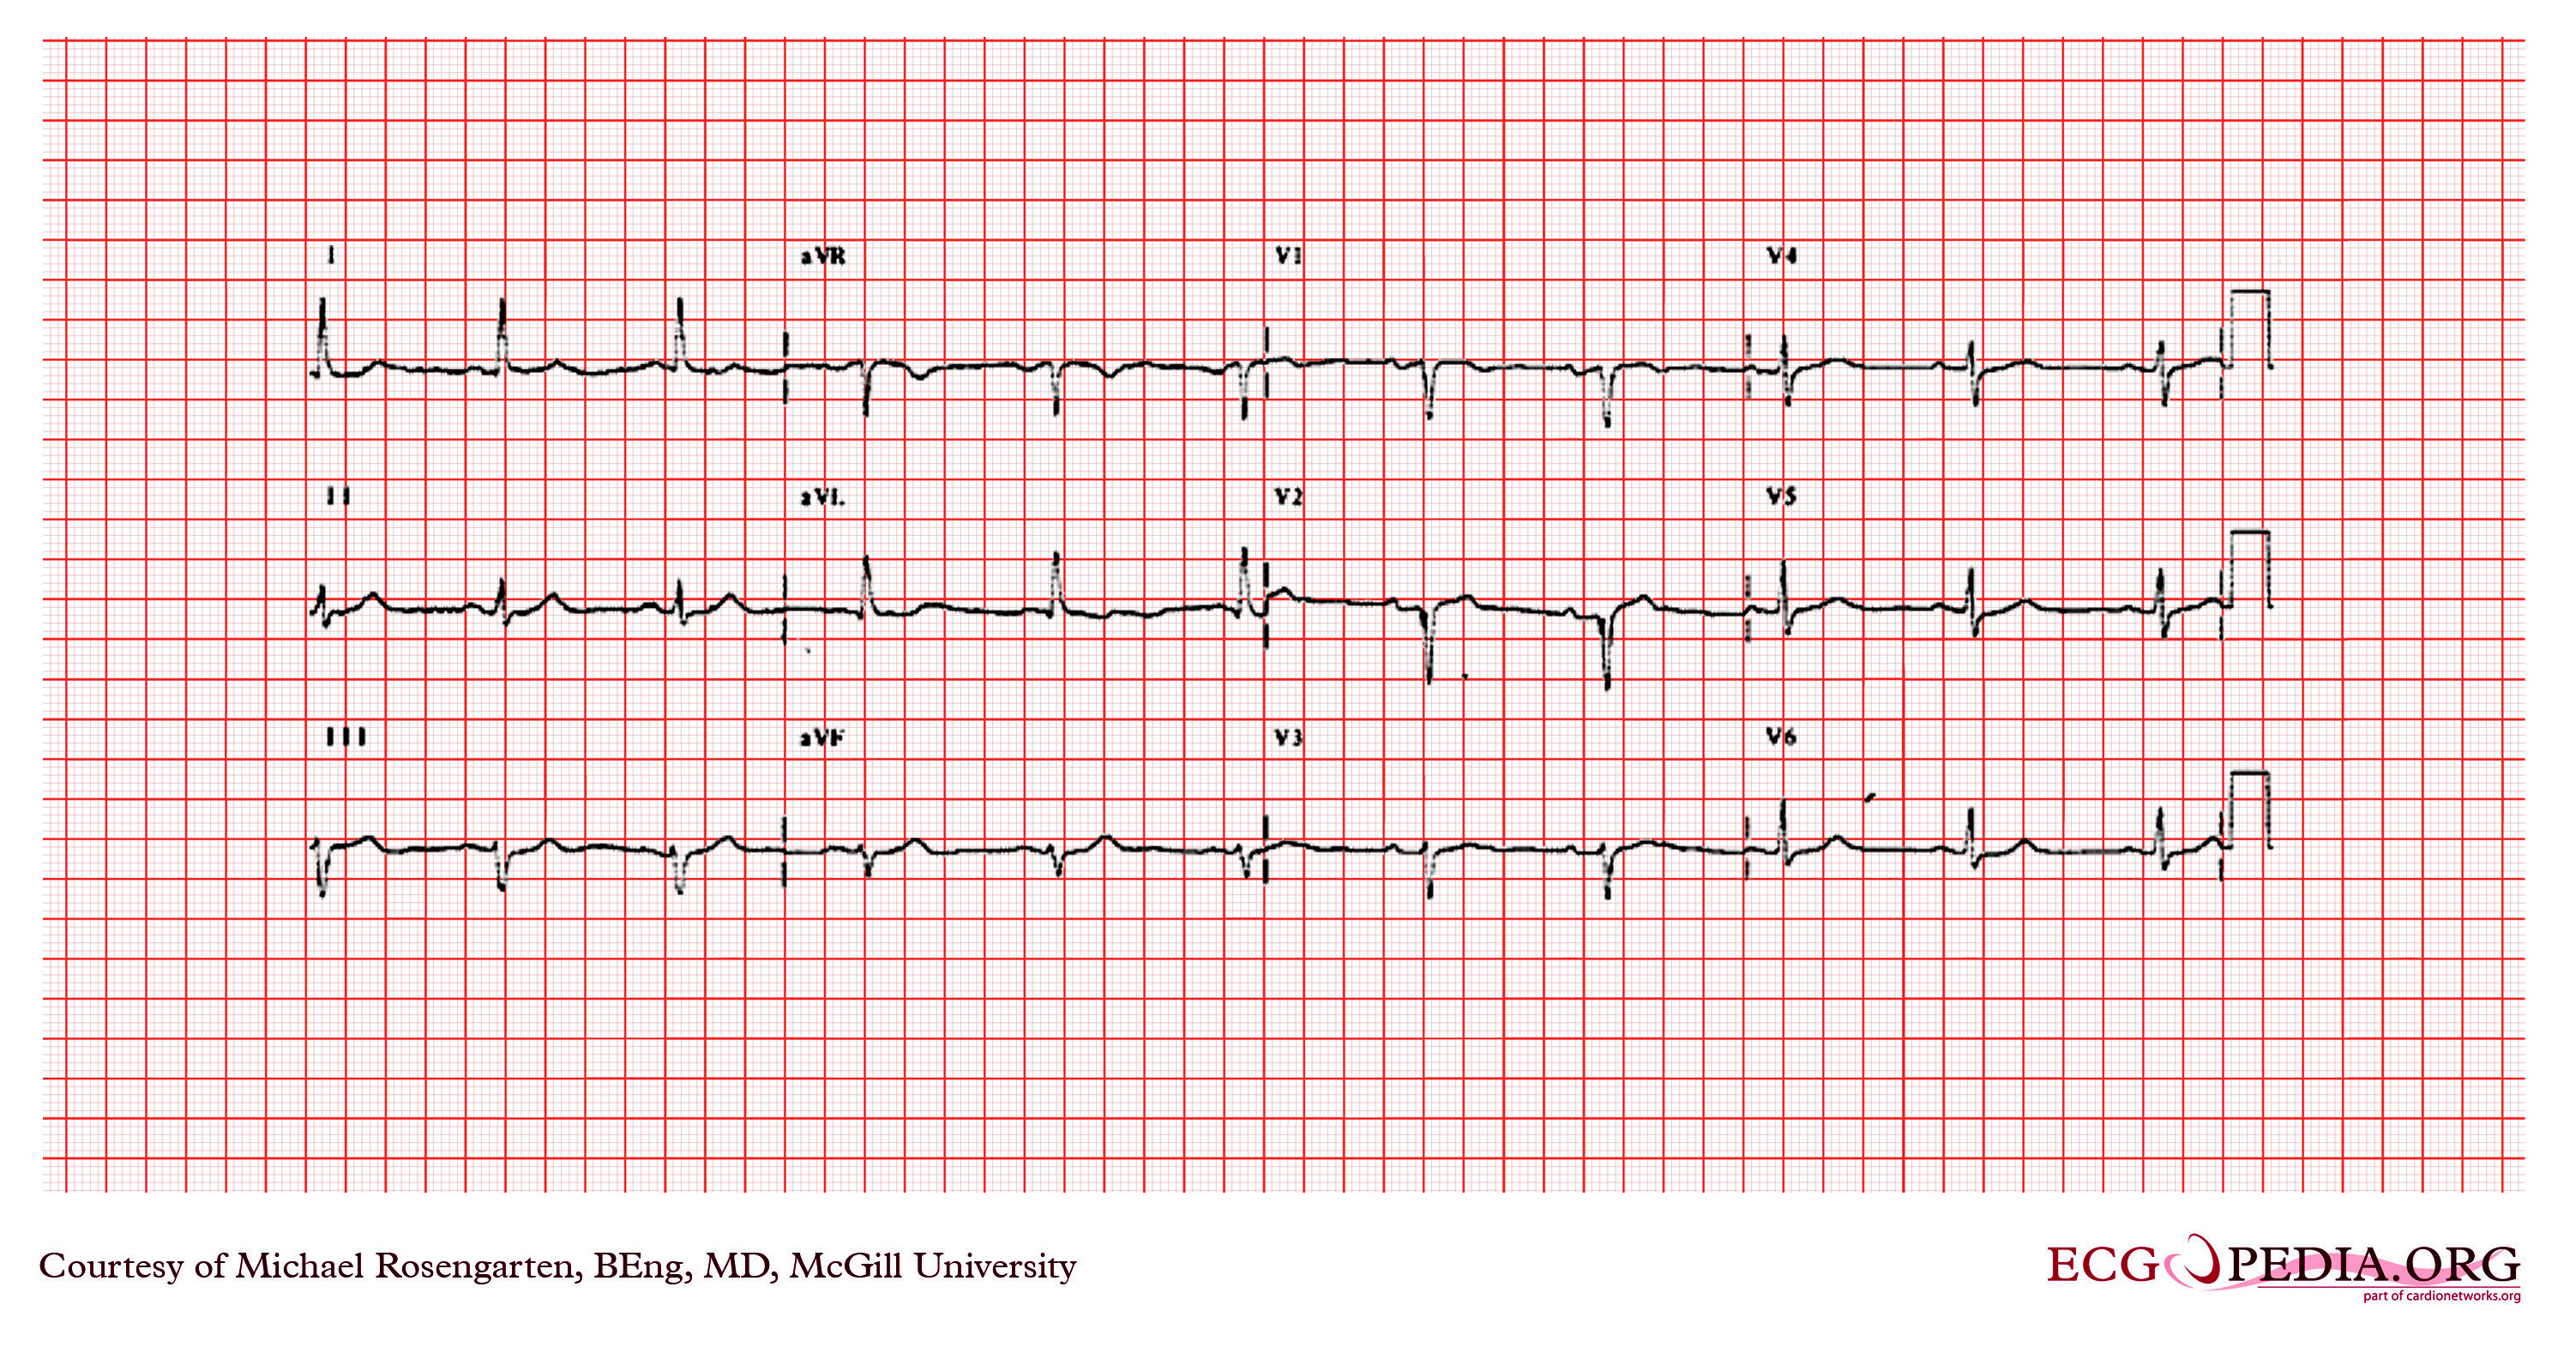 File:Previous anterior wall myocardial infartion..jpg